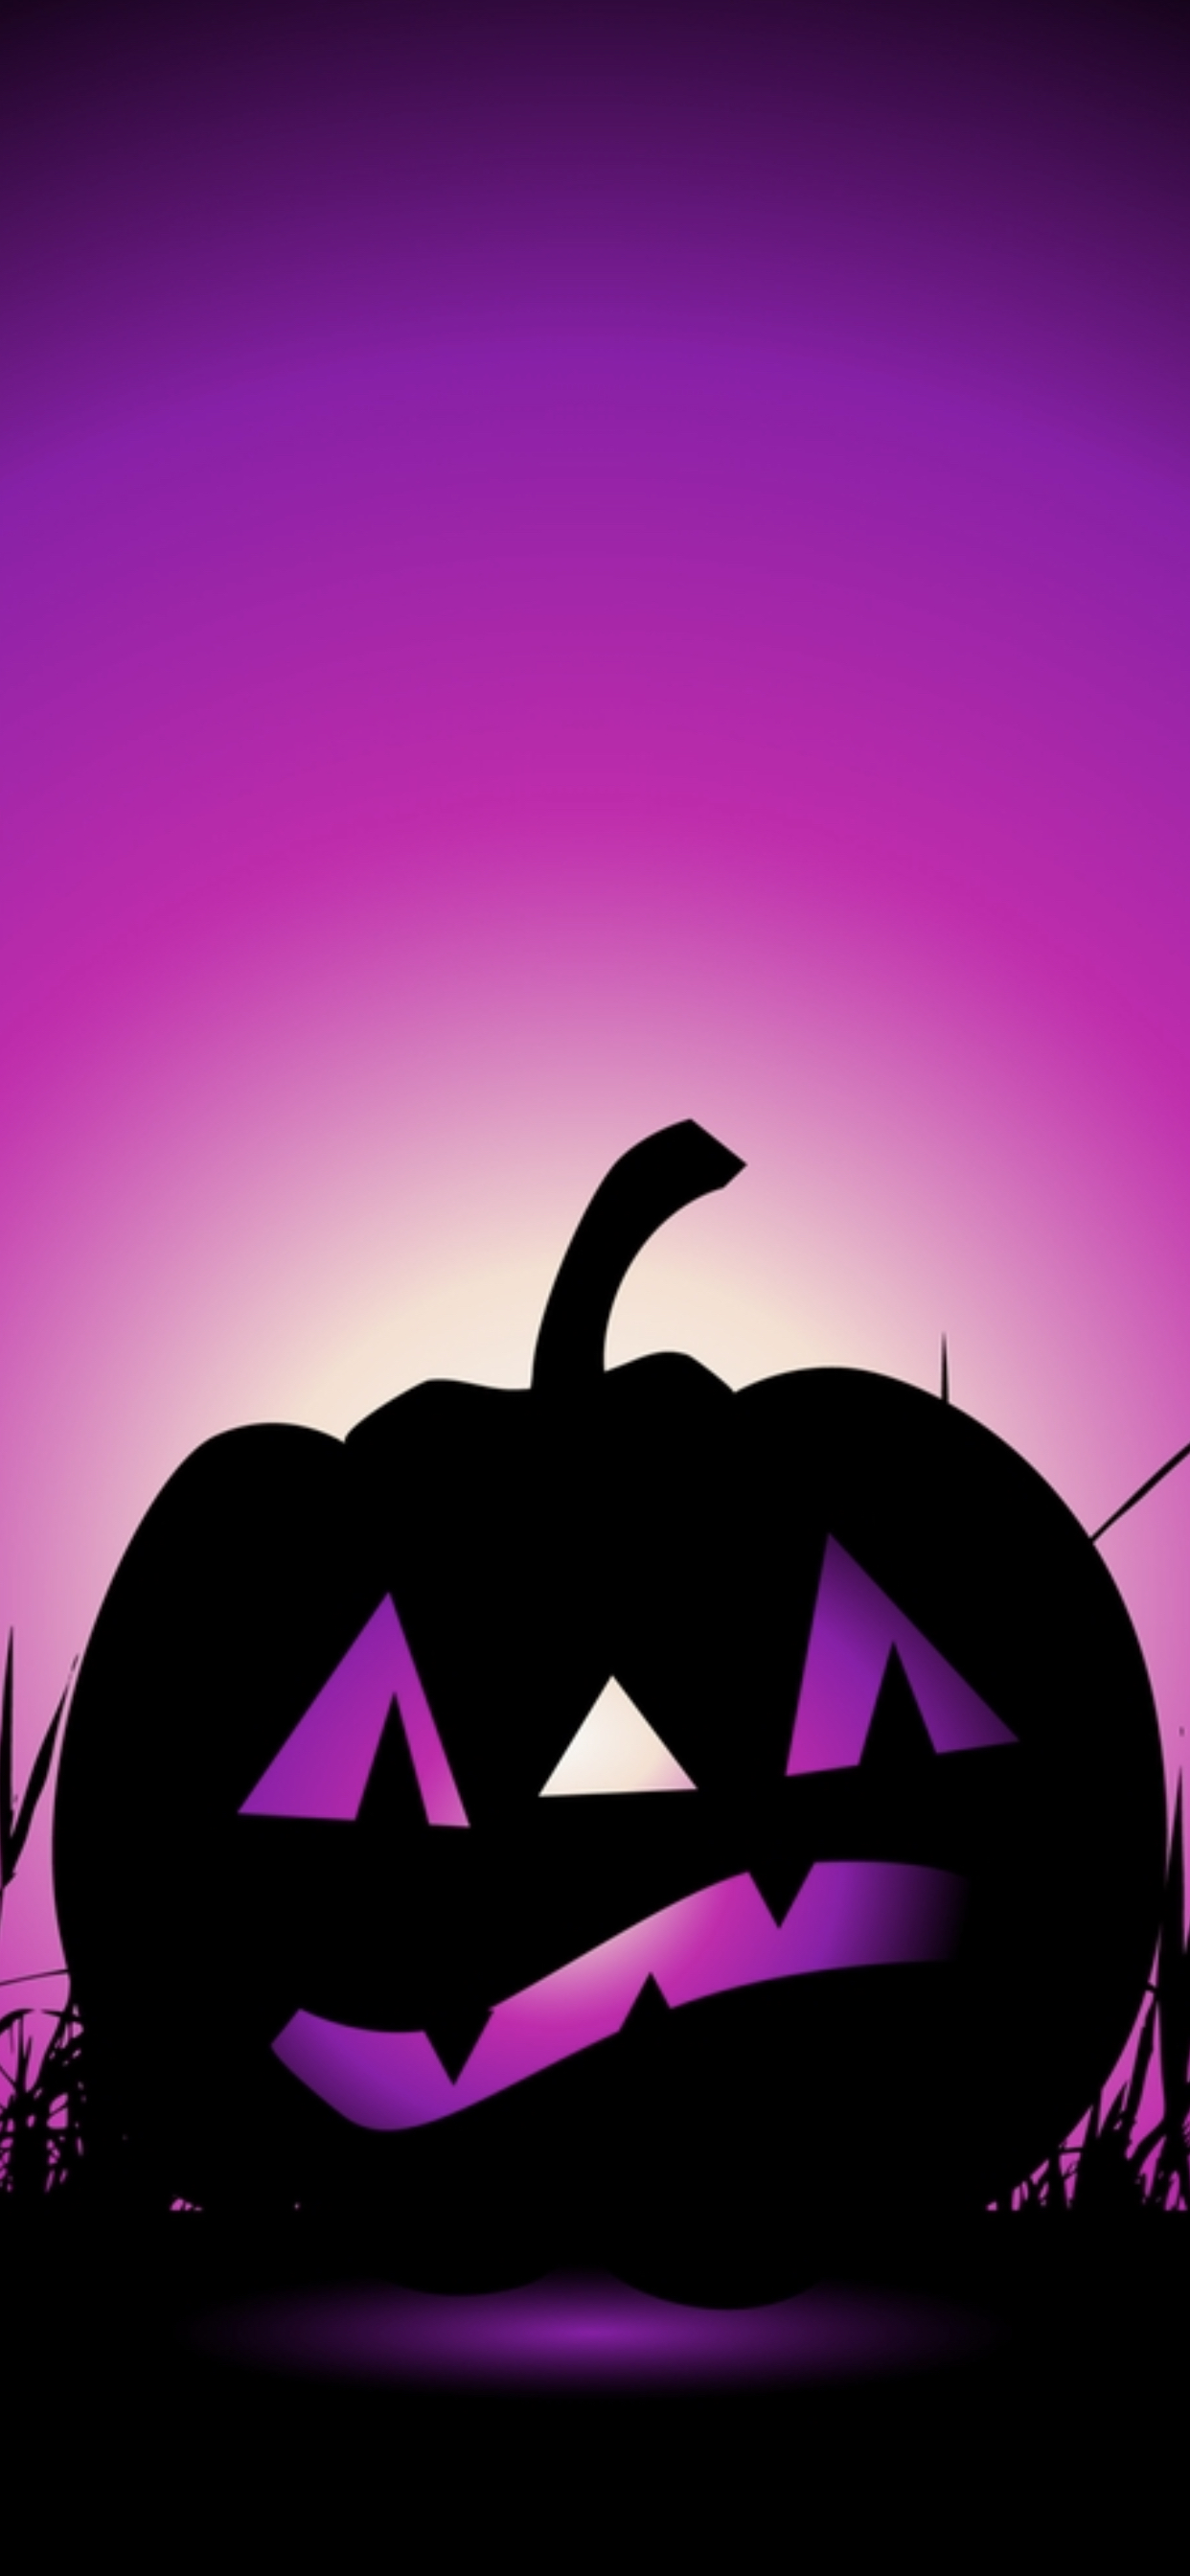 Sally Jack Skellington iPhone 6 Wallpaper in 2014 Halloween